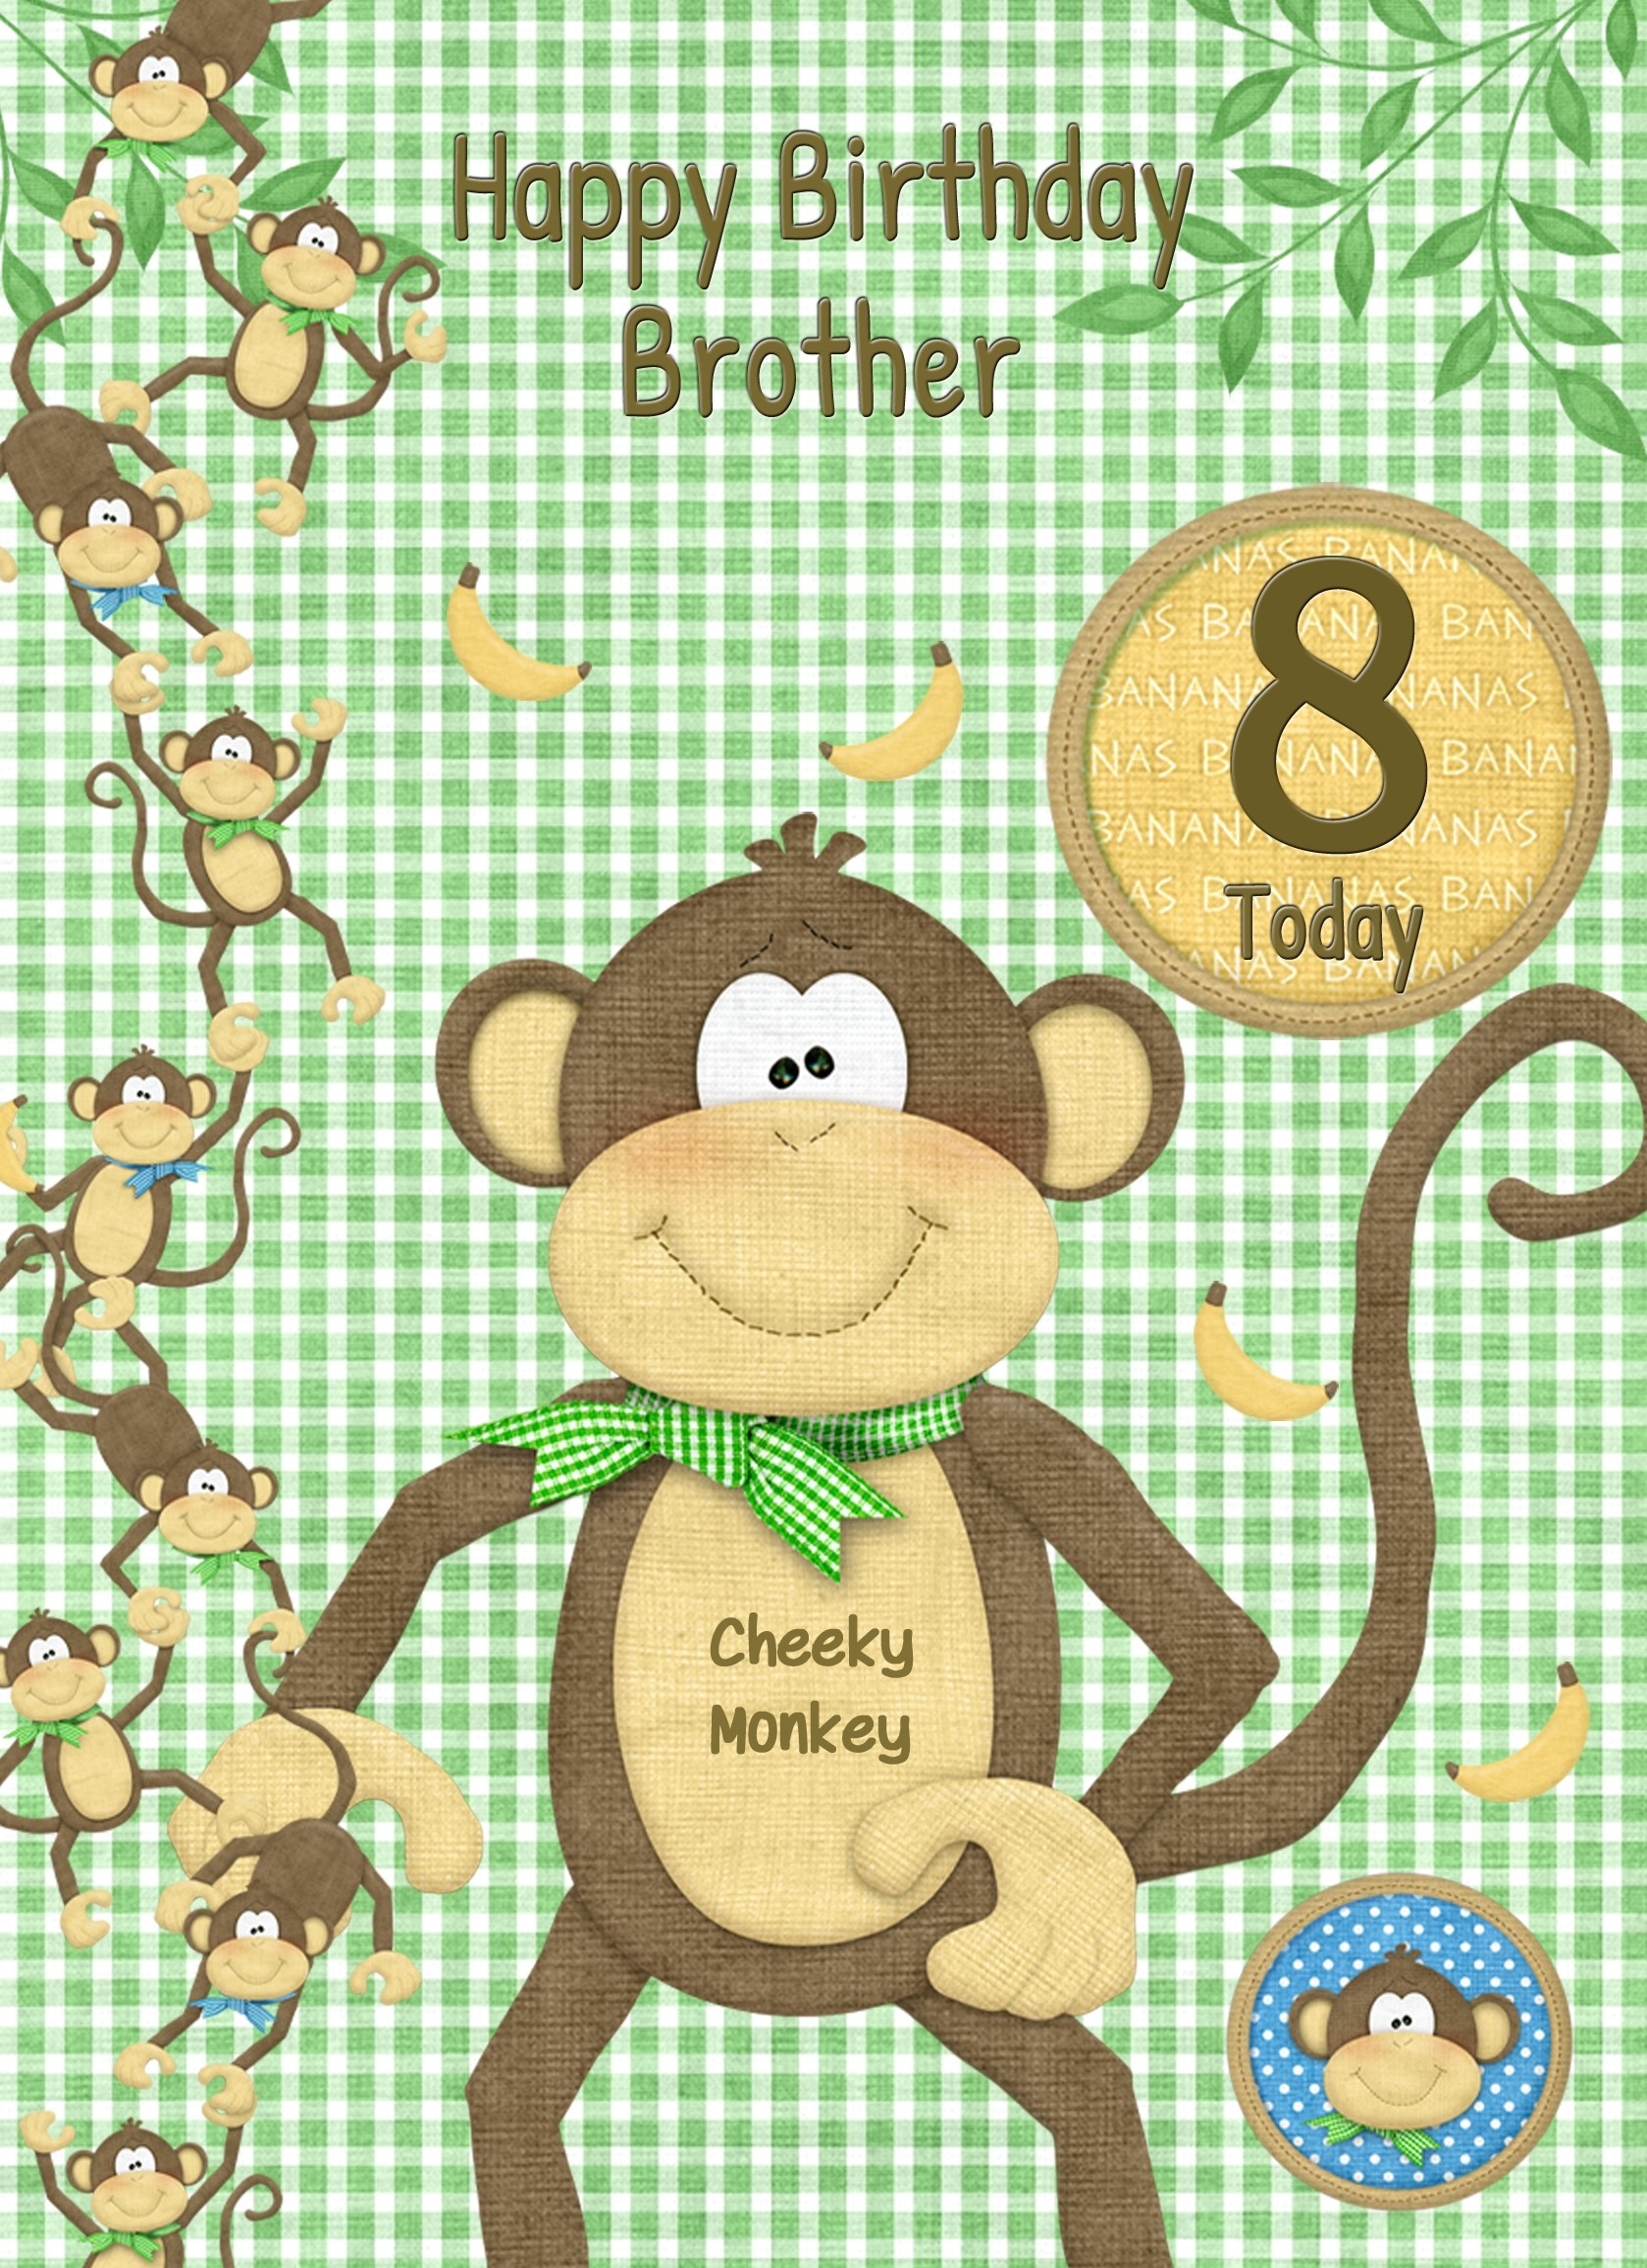 Kids 8th Birthday Cheeky Monkey Cartoon Card for Brother